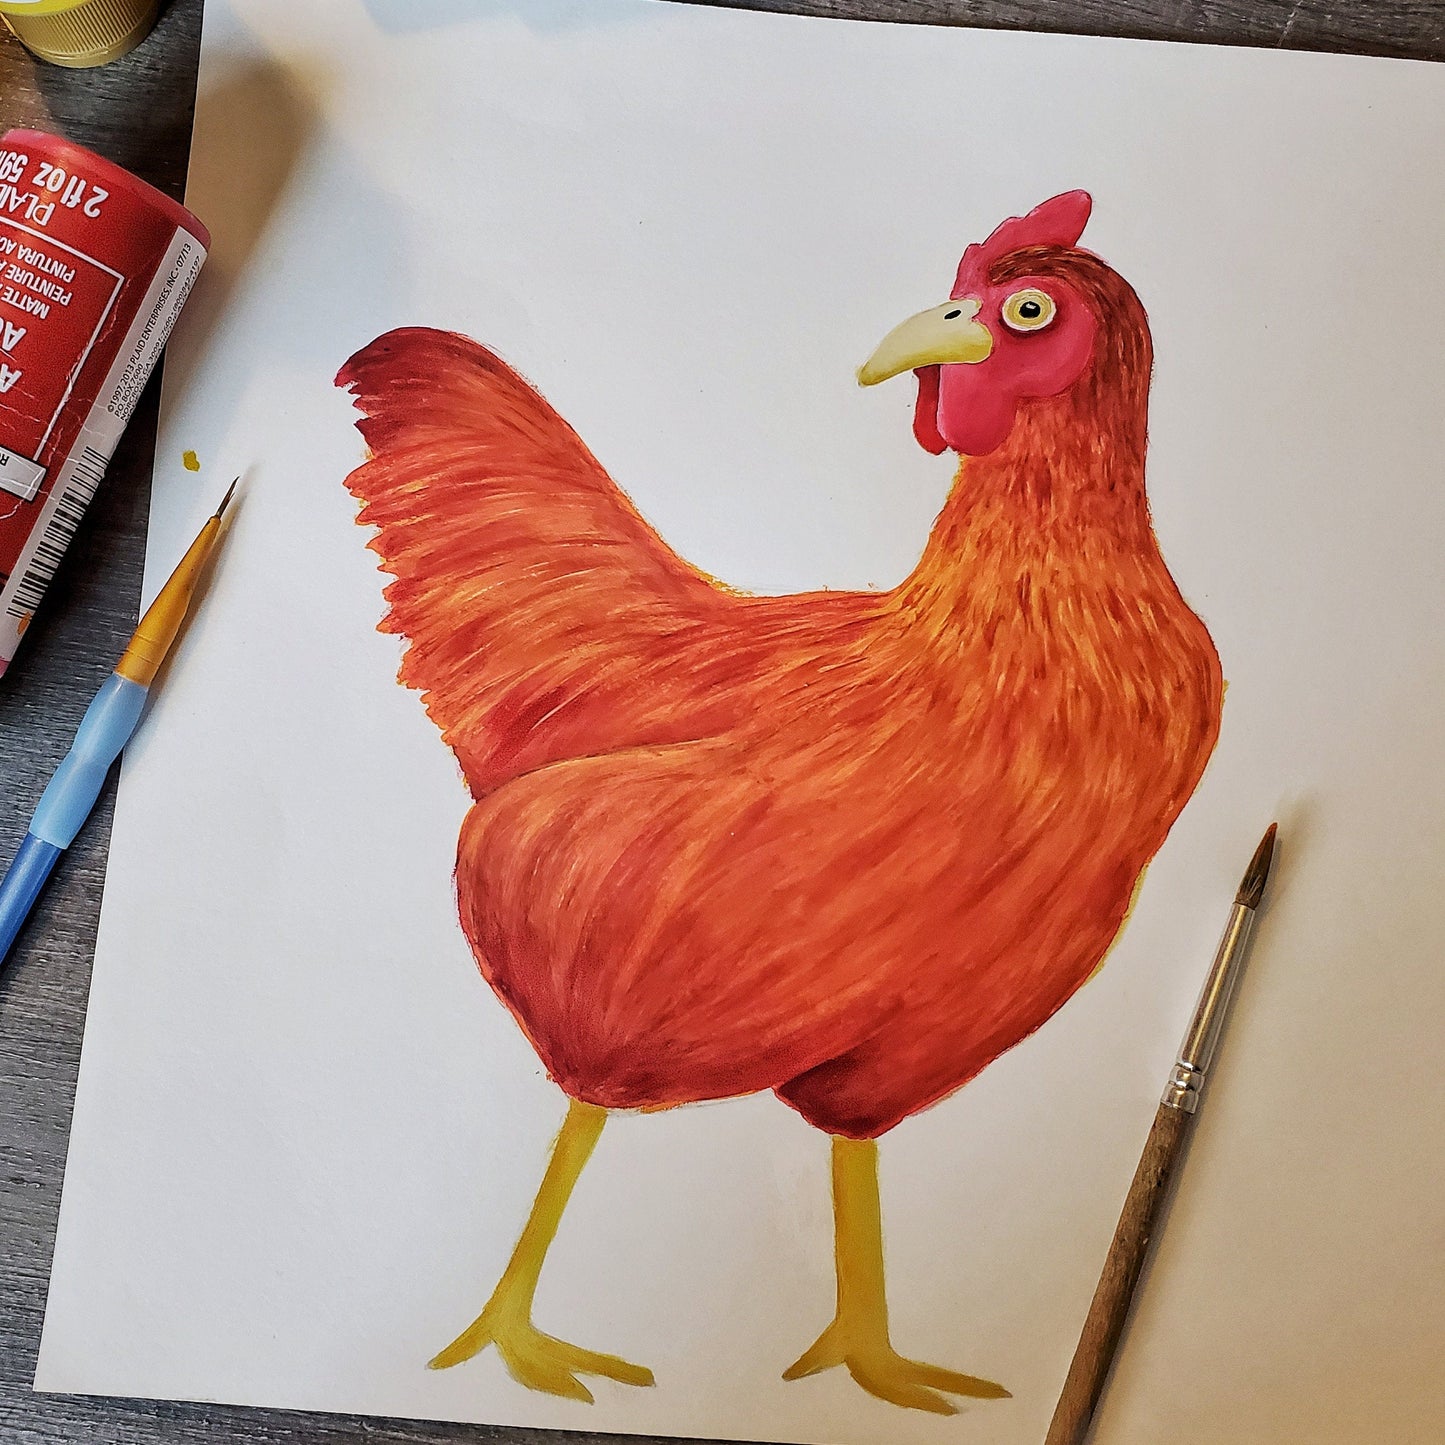 original hand painted red chicken illustration artwork